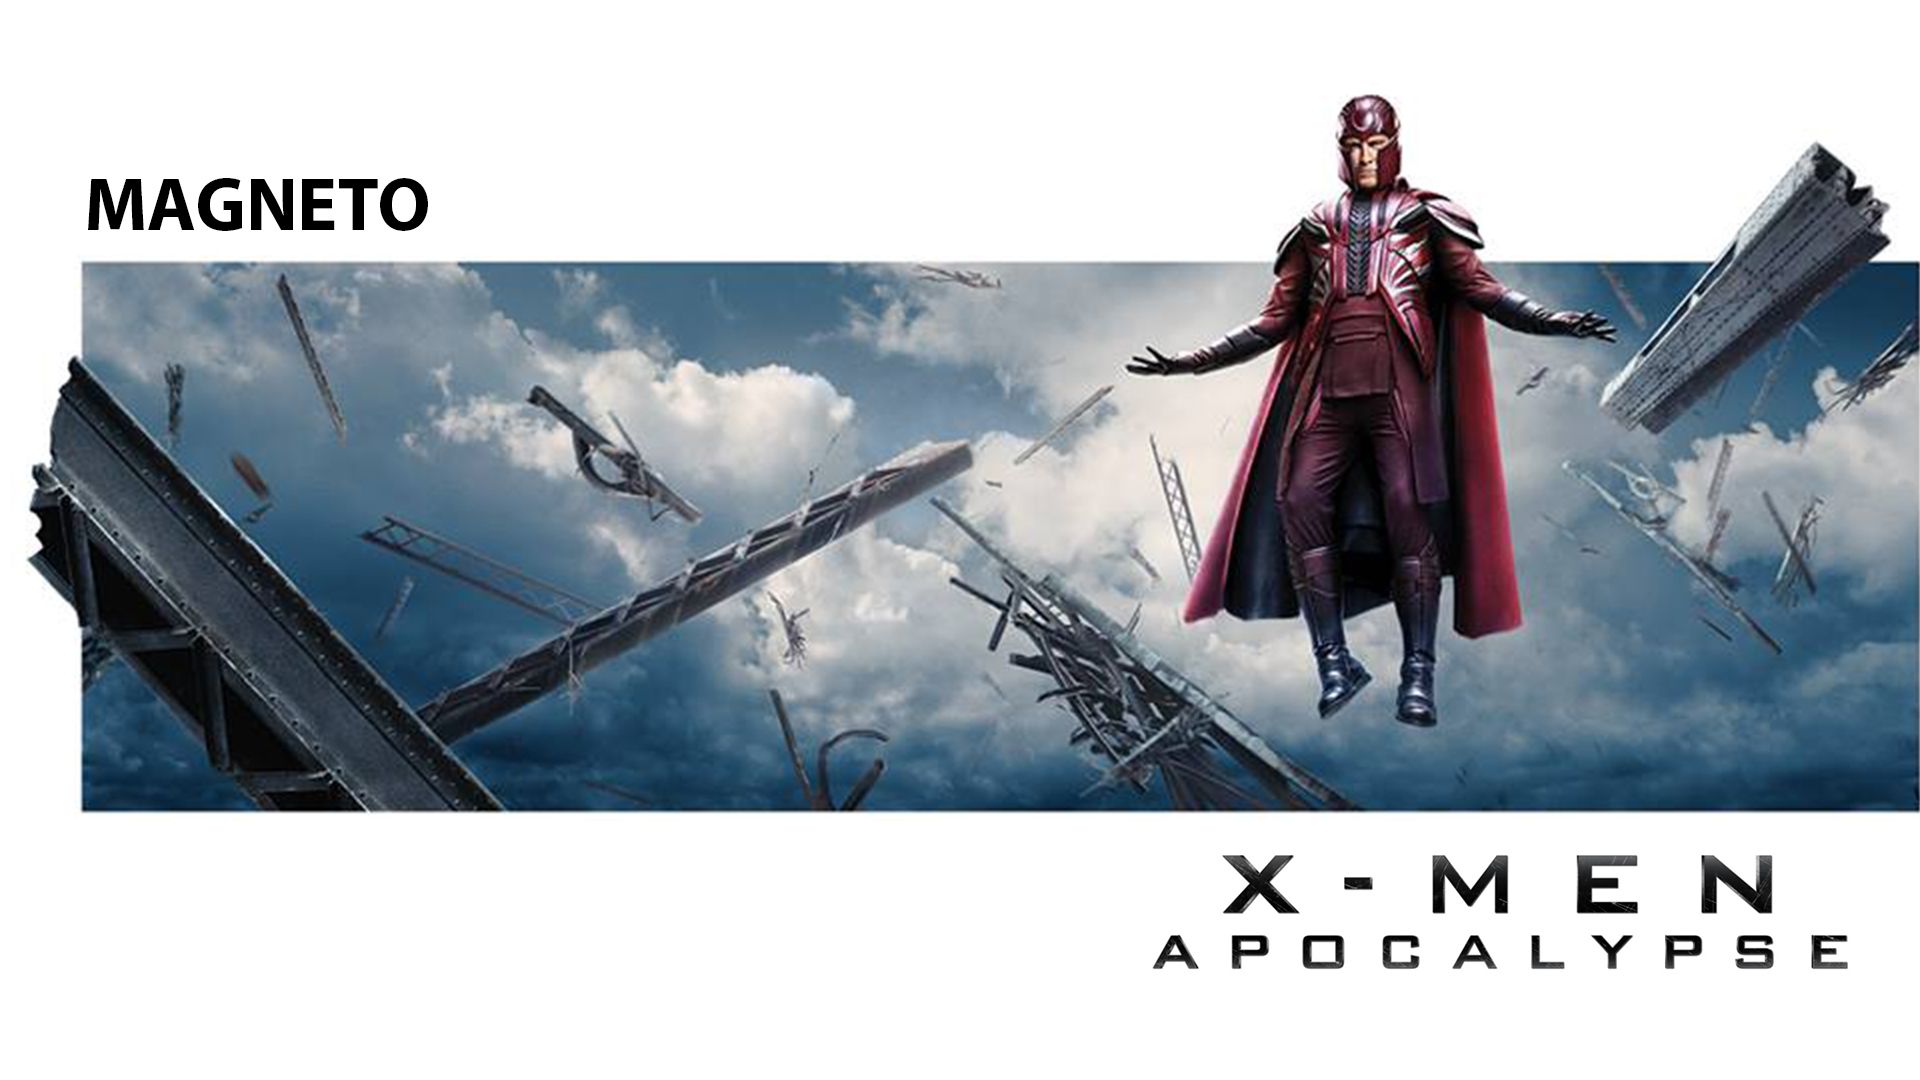 Magneto X Men Apocalypse wallpaper image Force, Science Fiction, Fan Group